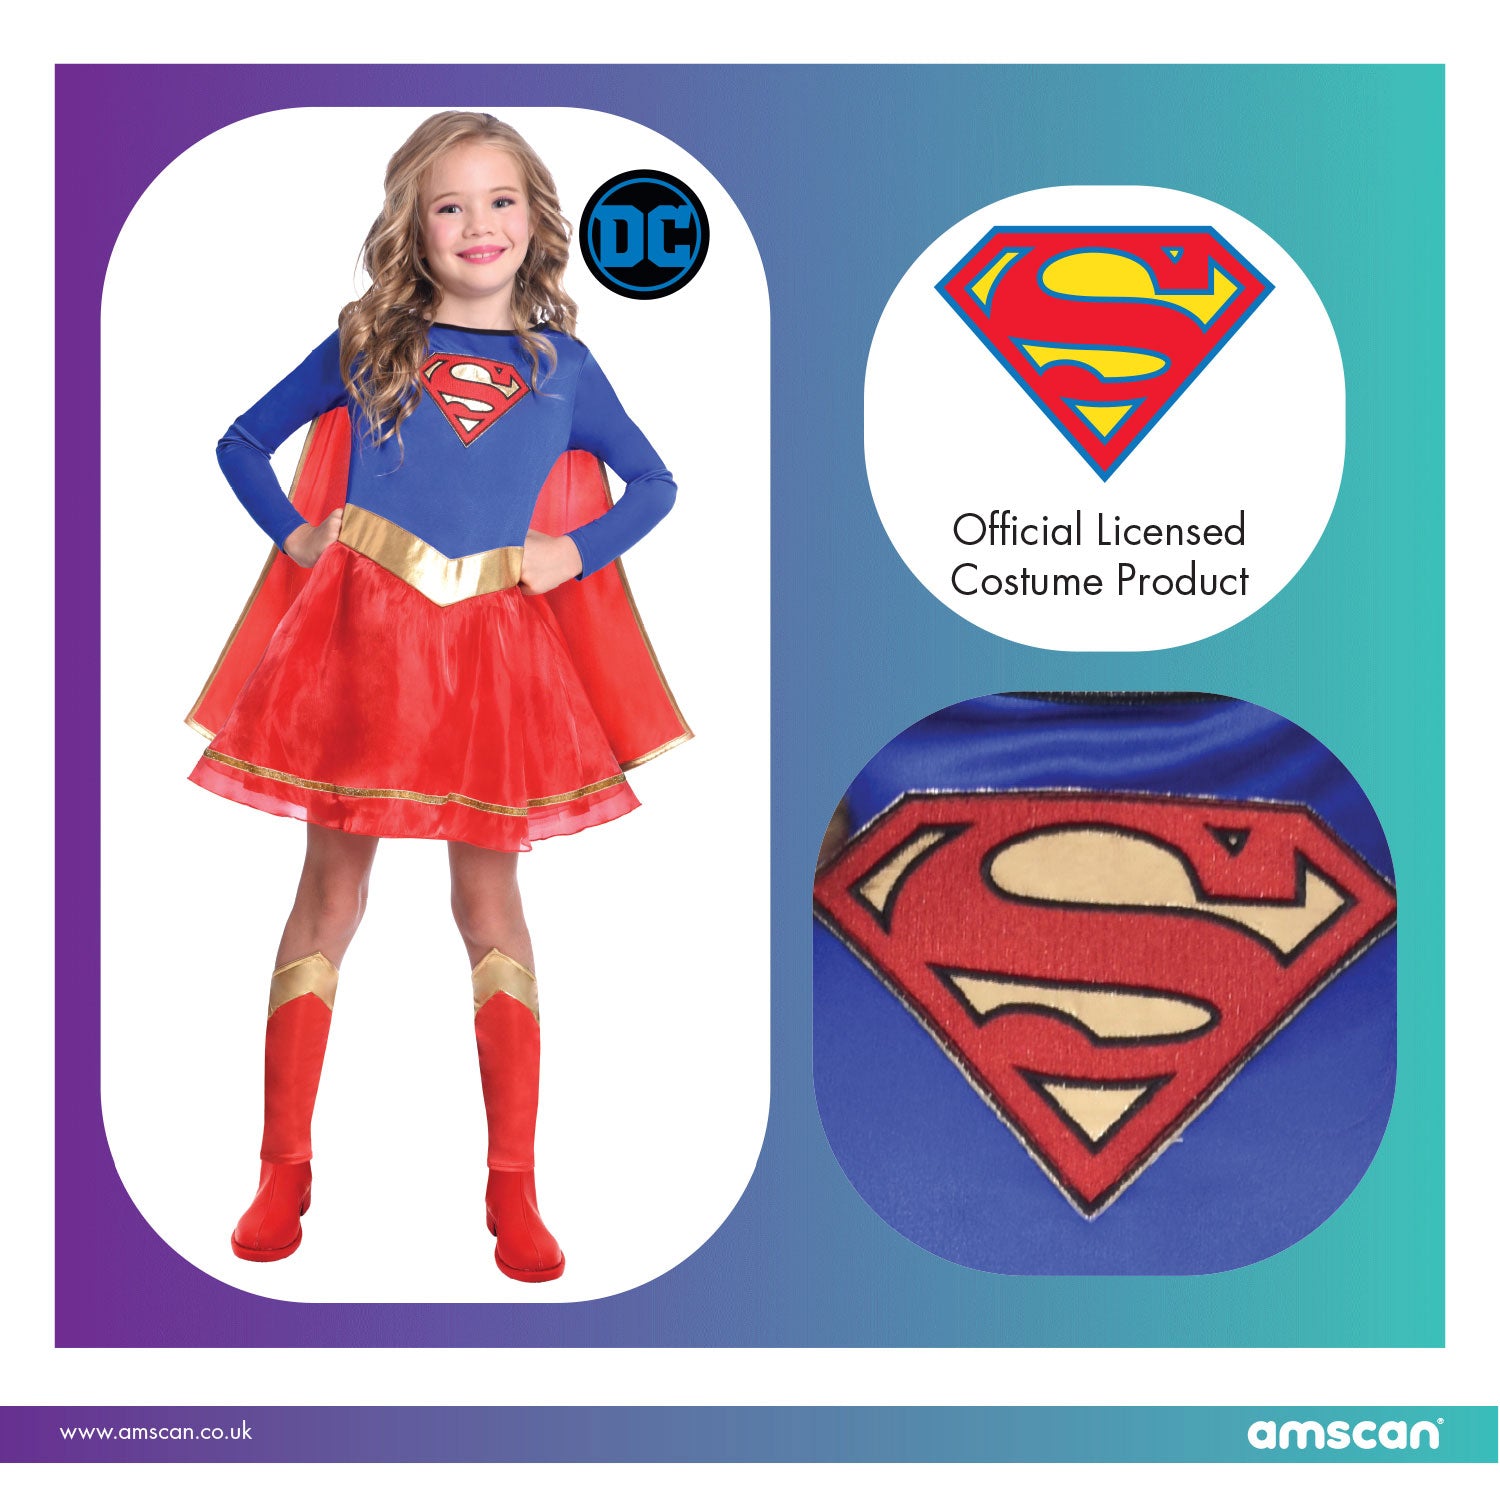 Supergirl Costume Carnevale Bambina Roleplay Fancy Dress – poptoys.it